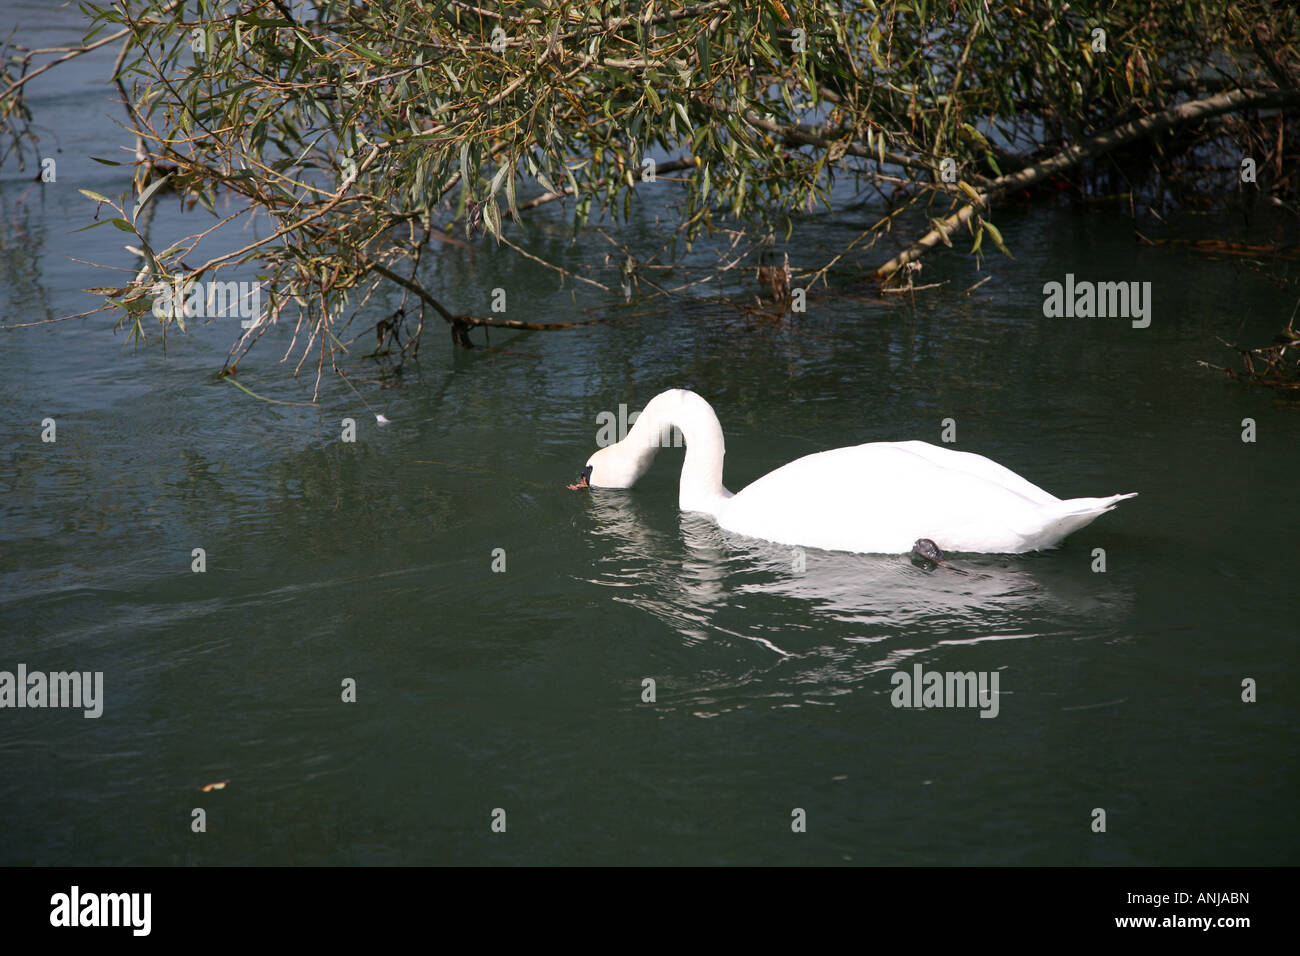 Swan swimming on river feeding Stock Photo